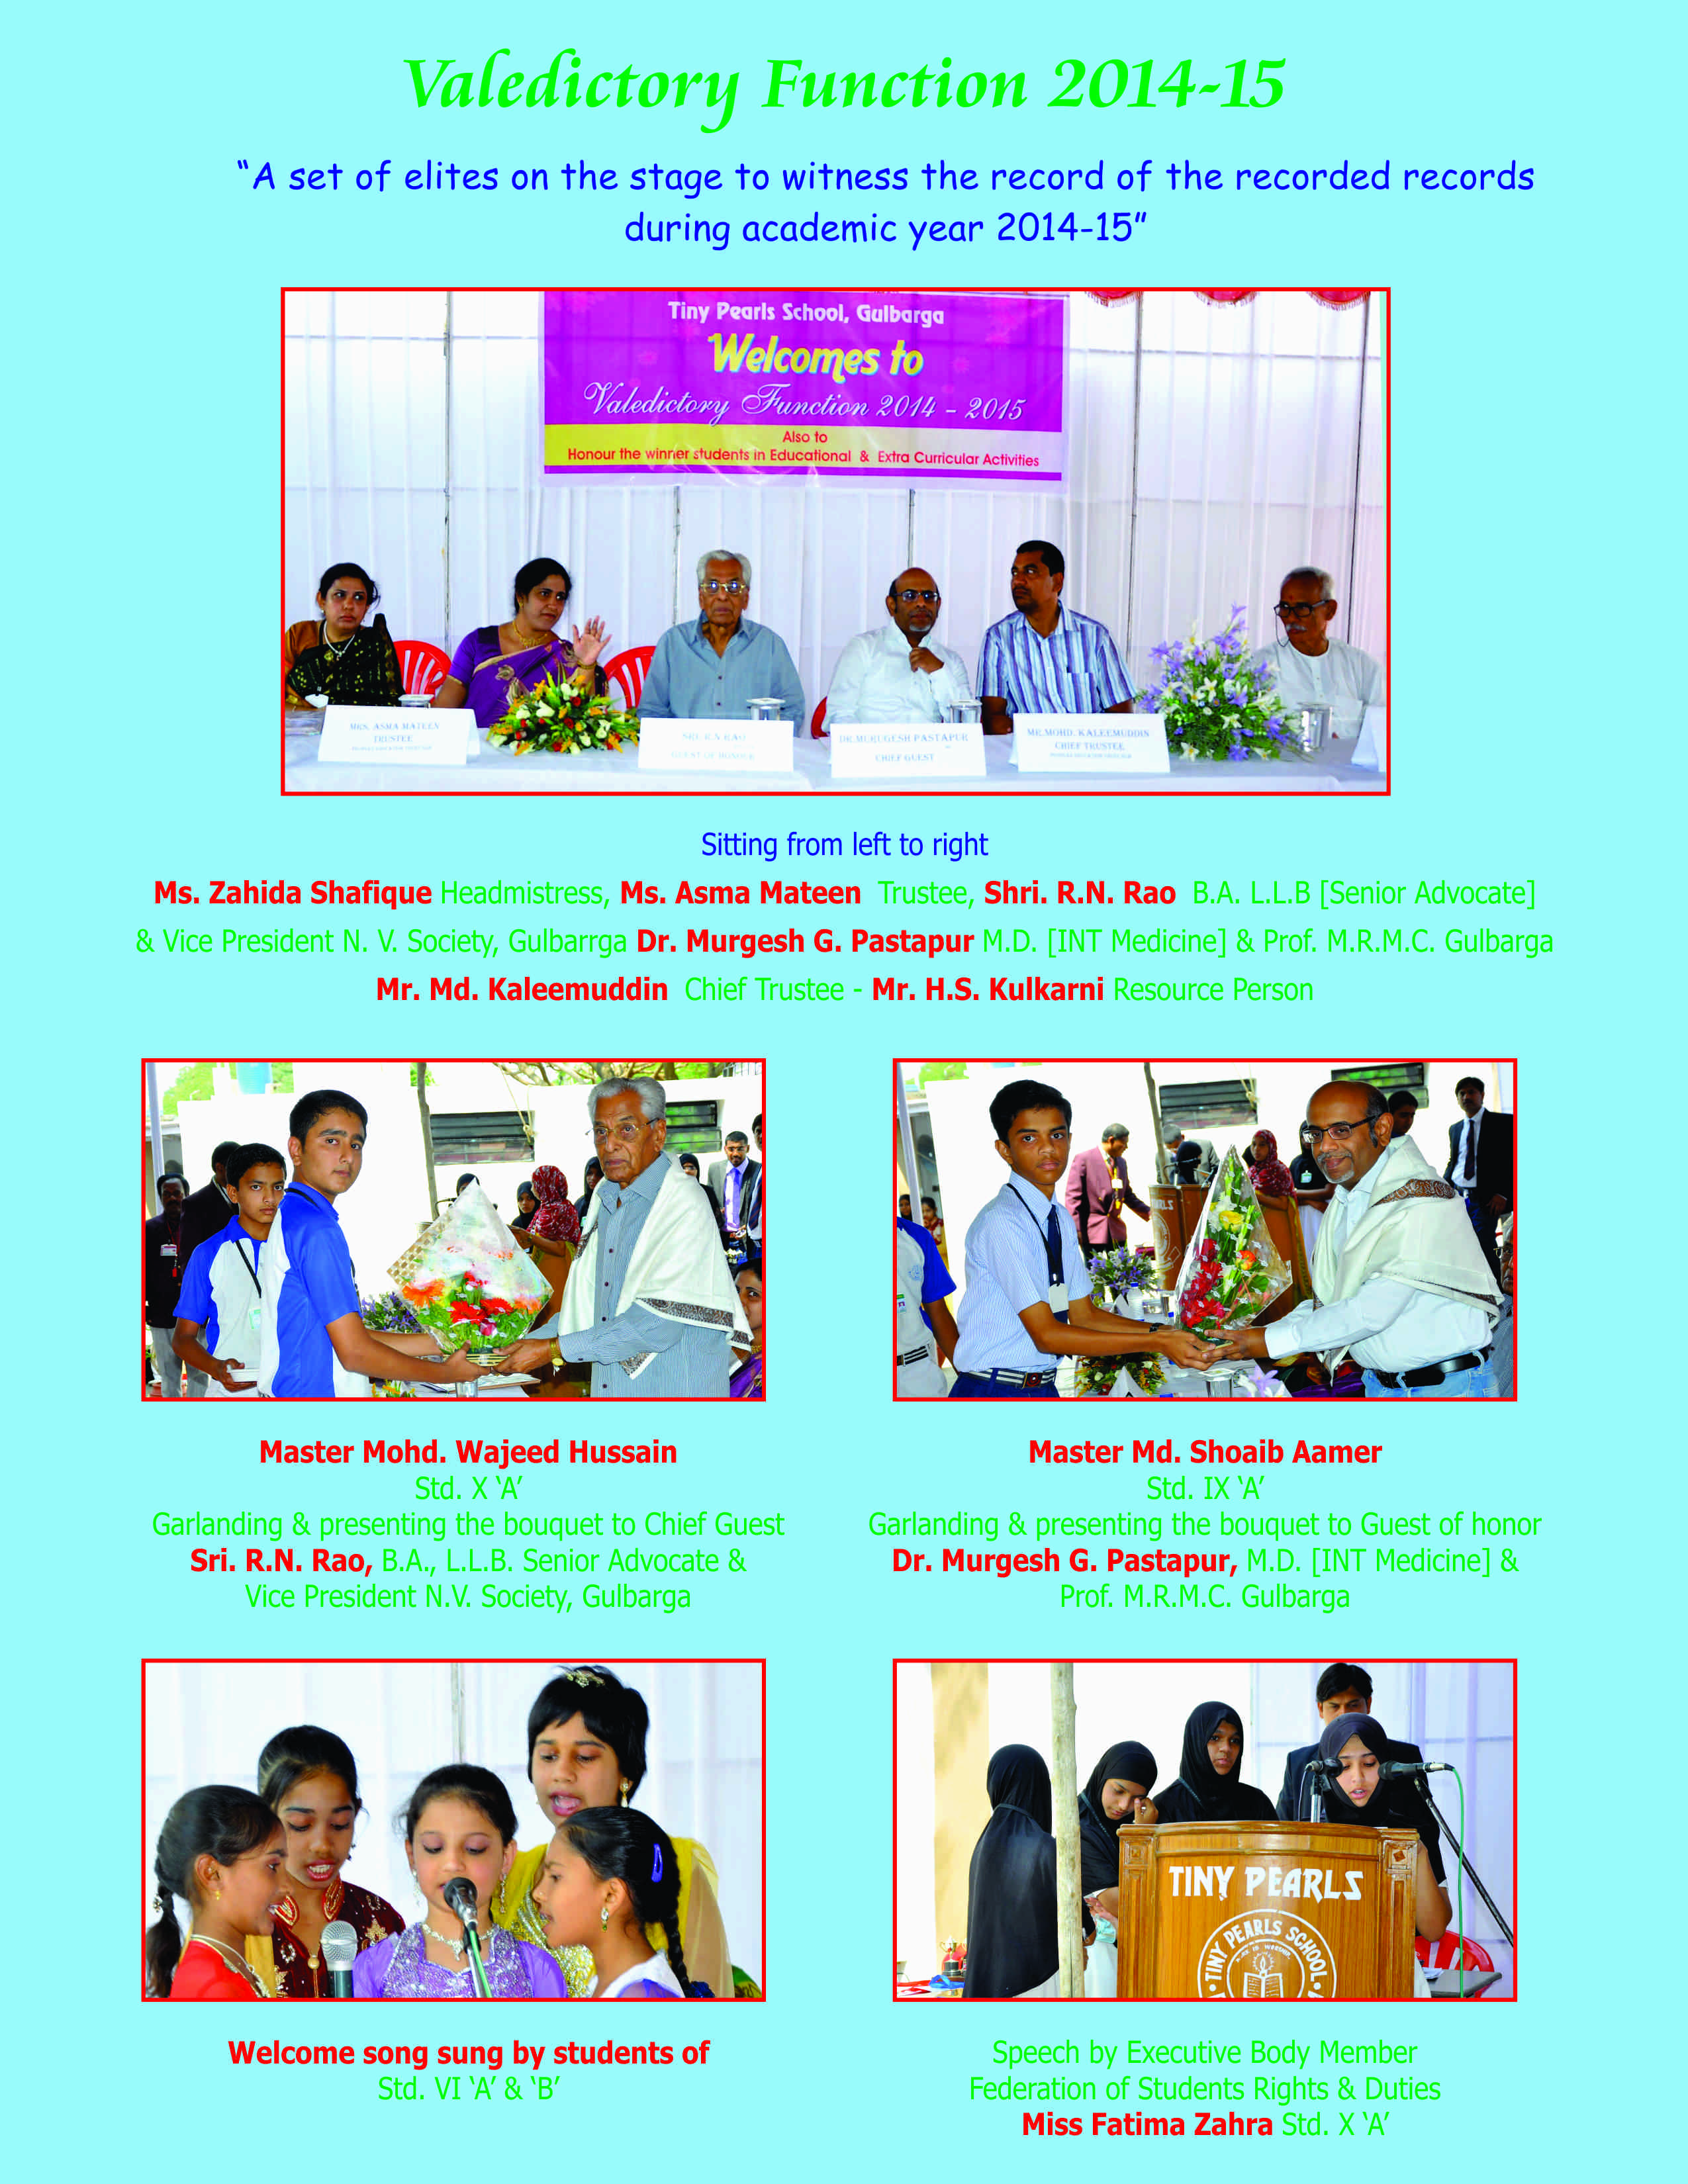 Tiny Pearls school Valedictory Function 2014-15 Schools in Gulbarga